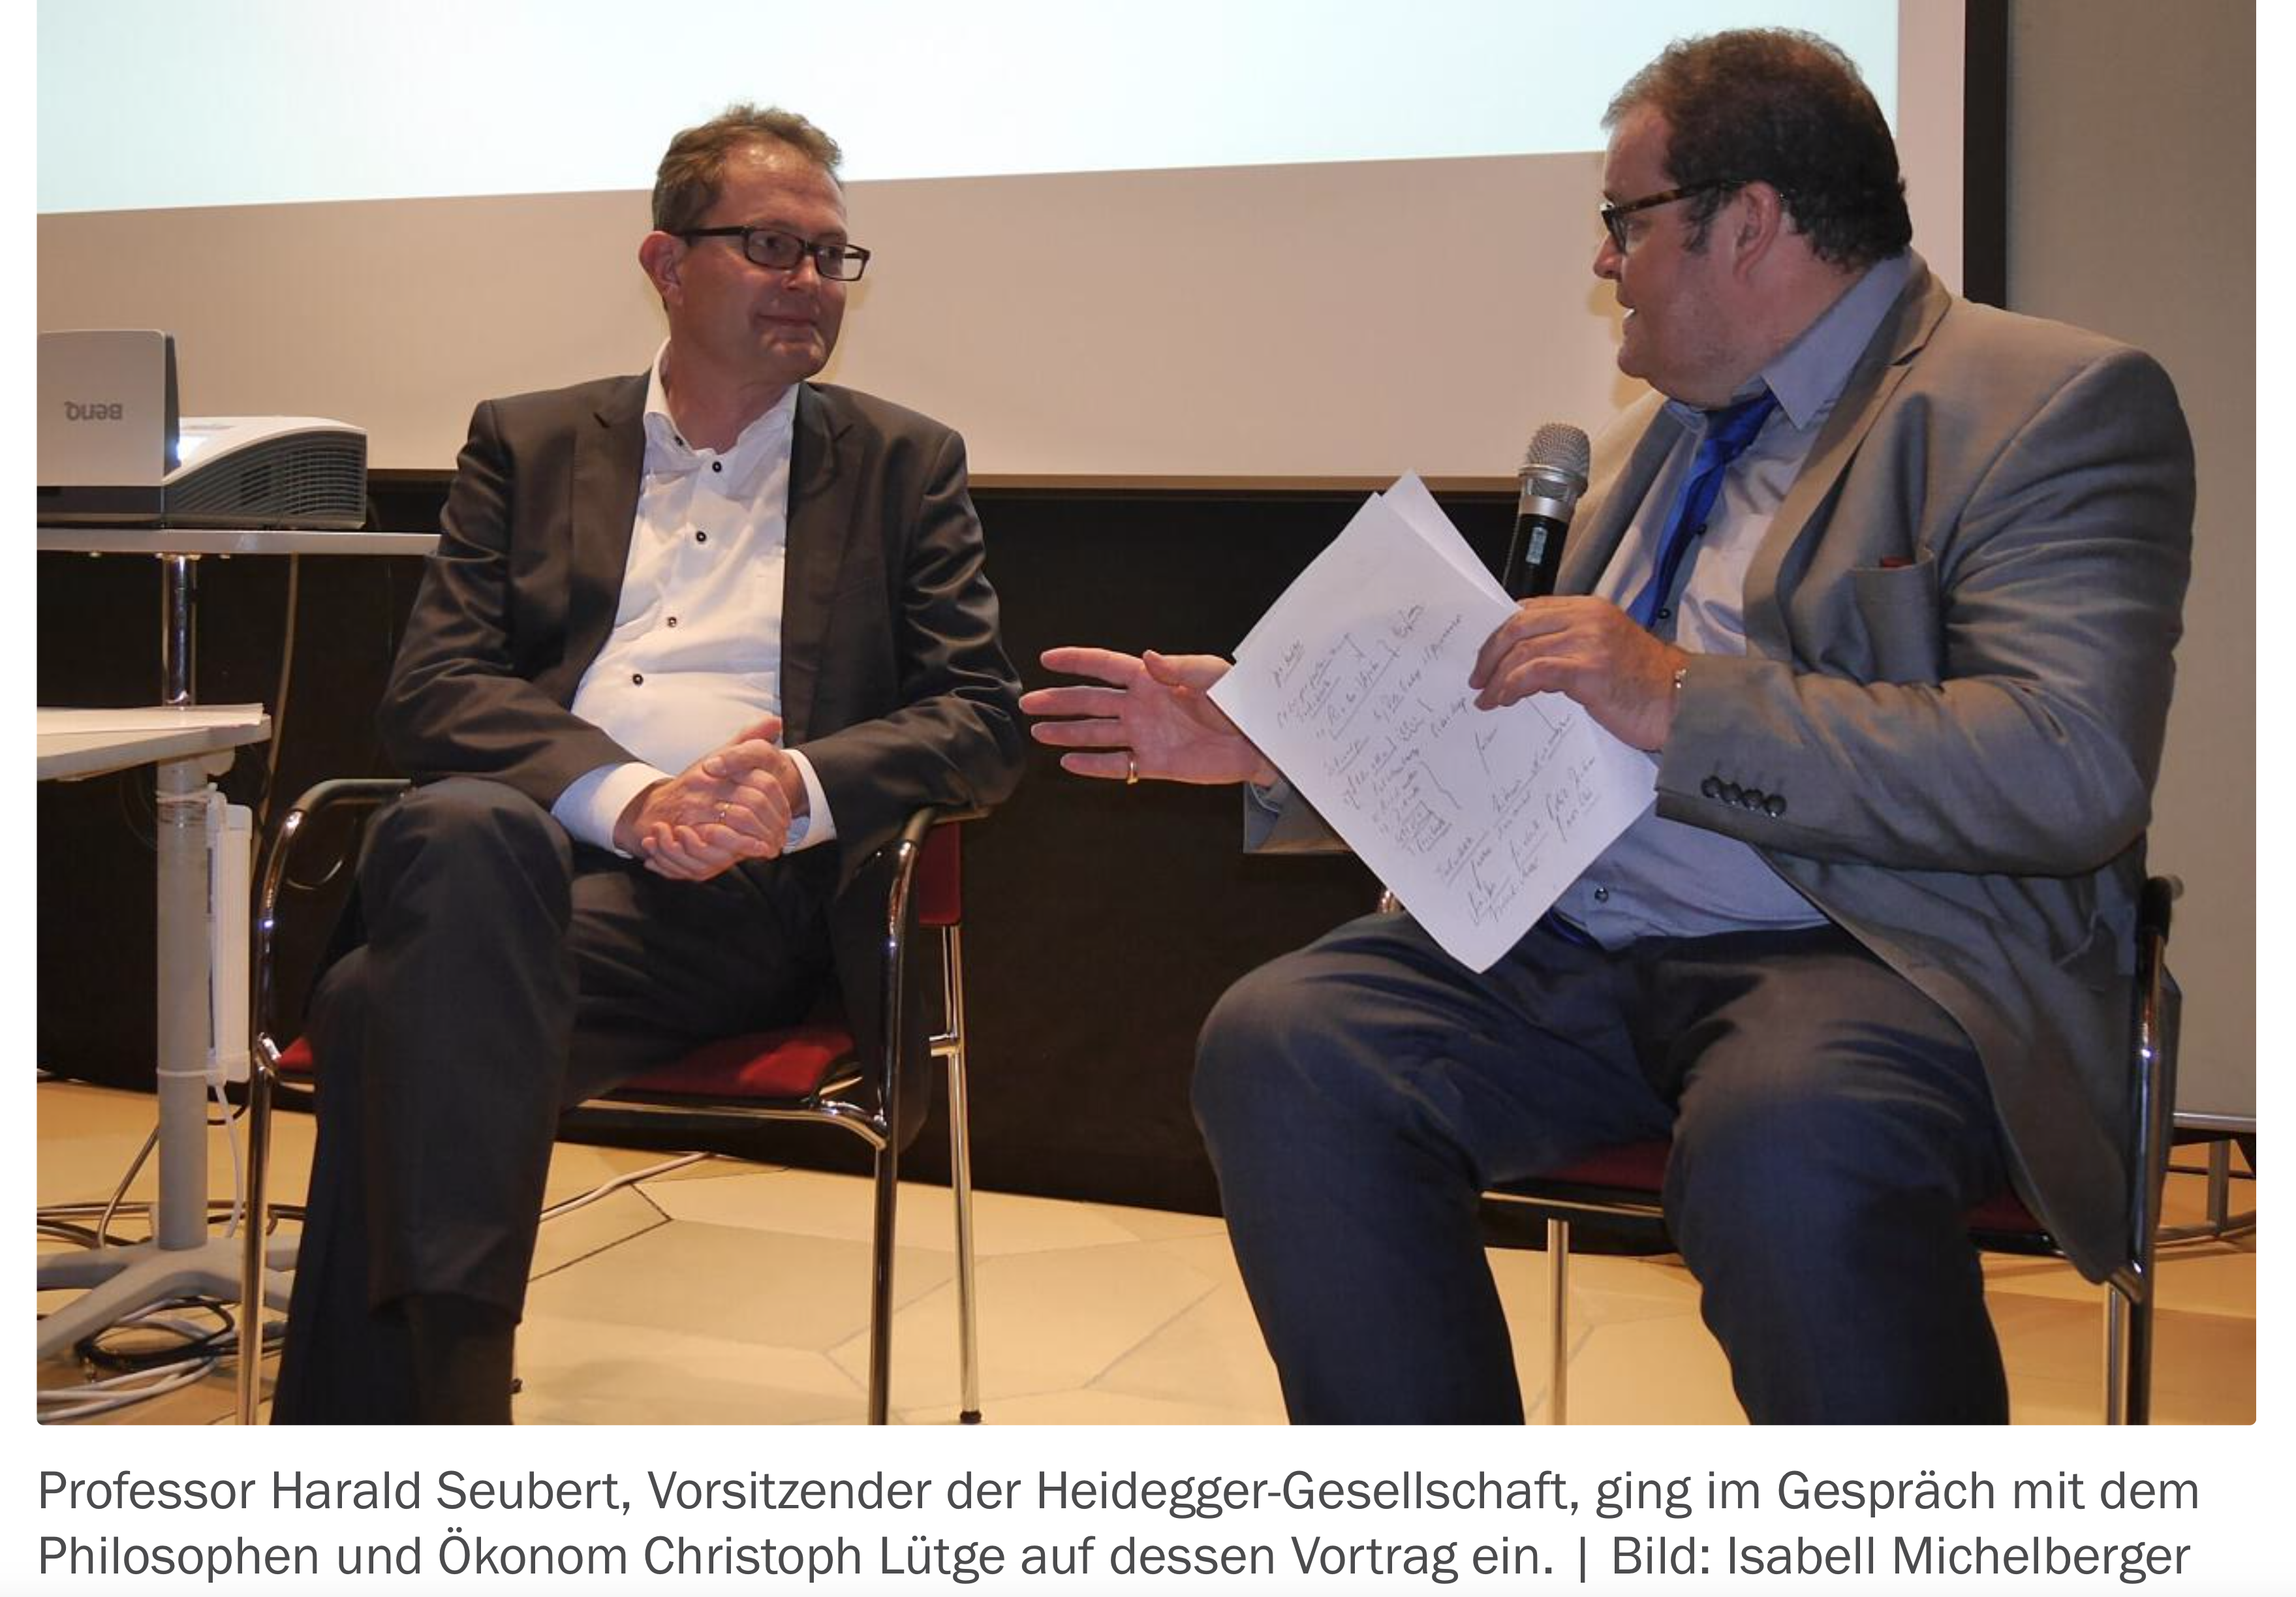 Meßkirch, Annual Conference of the Heidegger Society, 2019